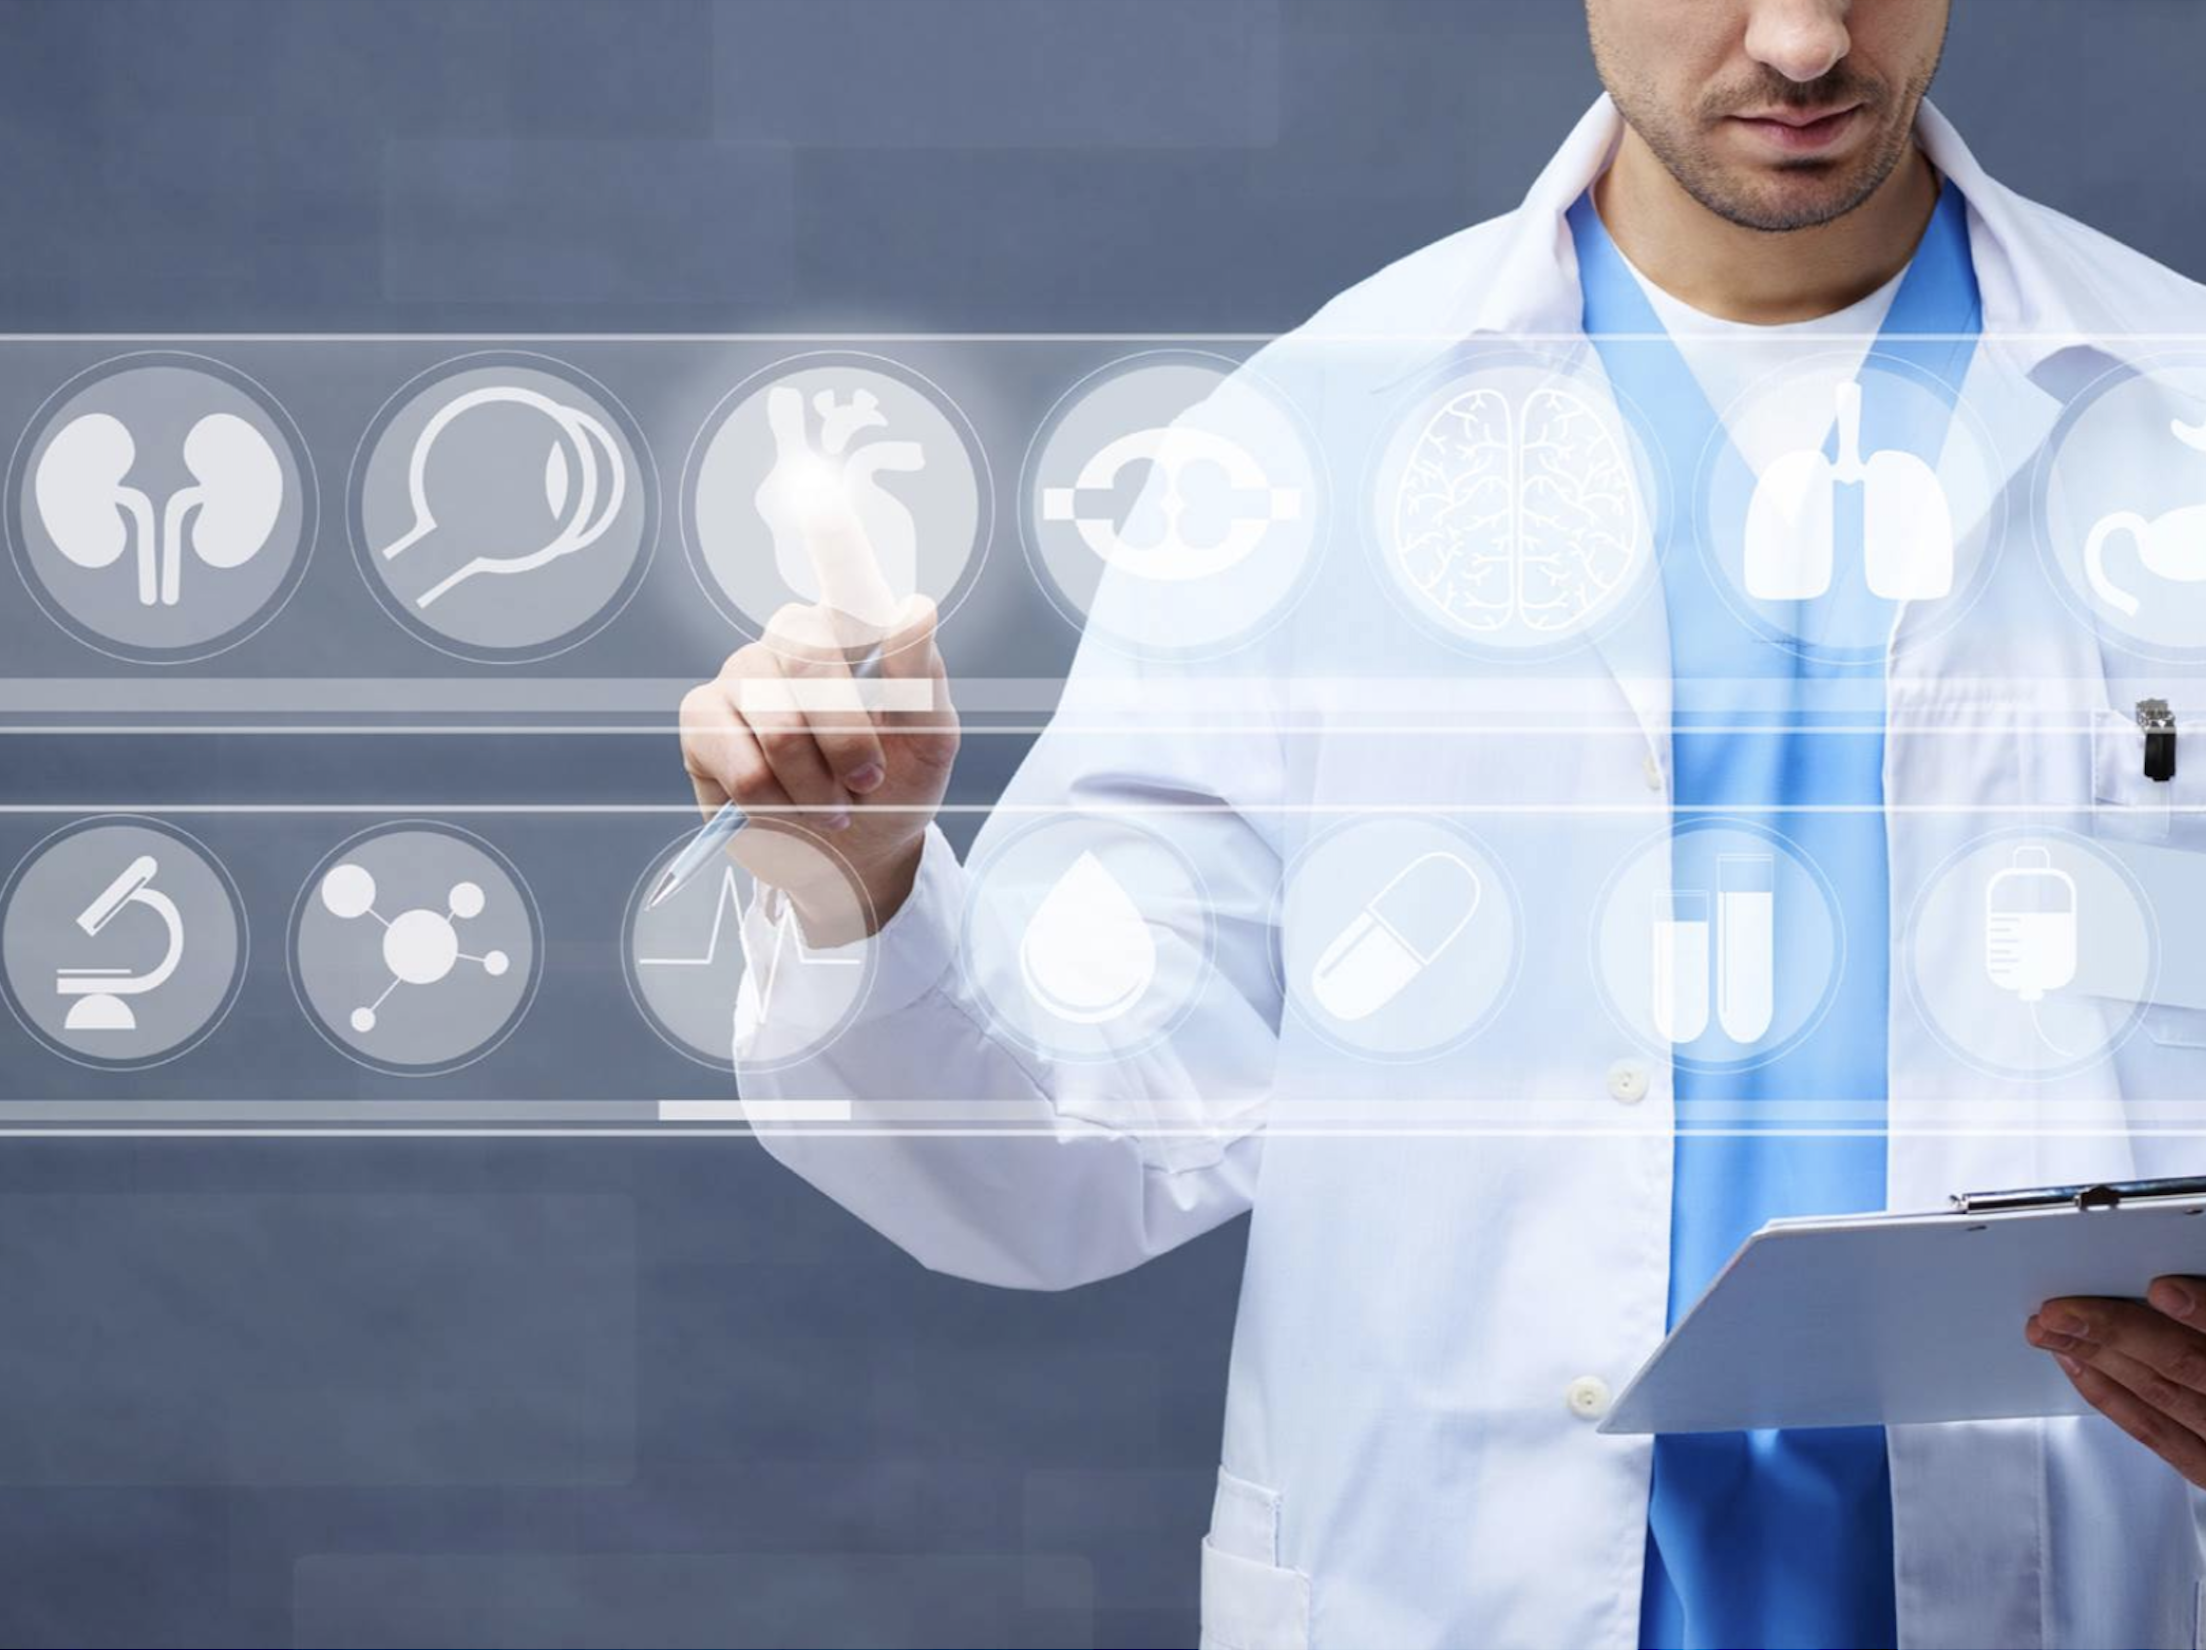 Технологии в здравоохранении. Цифровая медицина. Инновации в медицине и здравоохранении. Цифровые технологии в медицине.